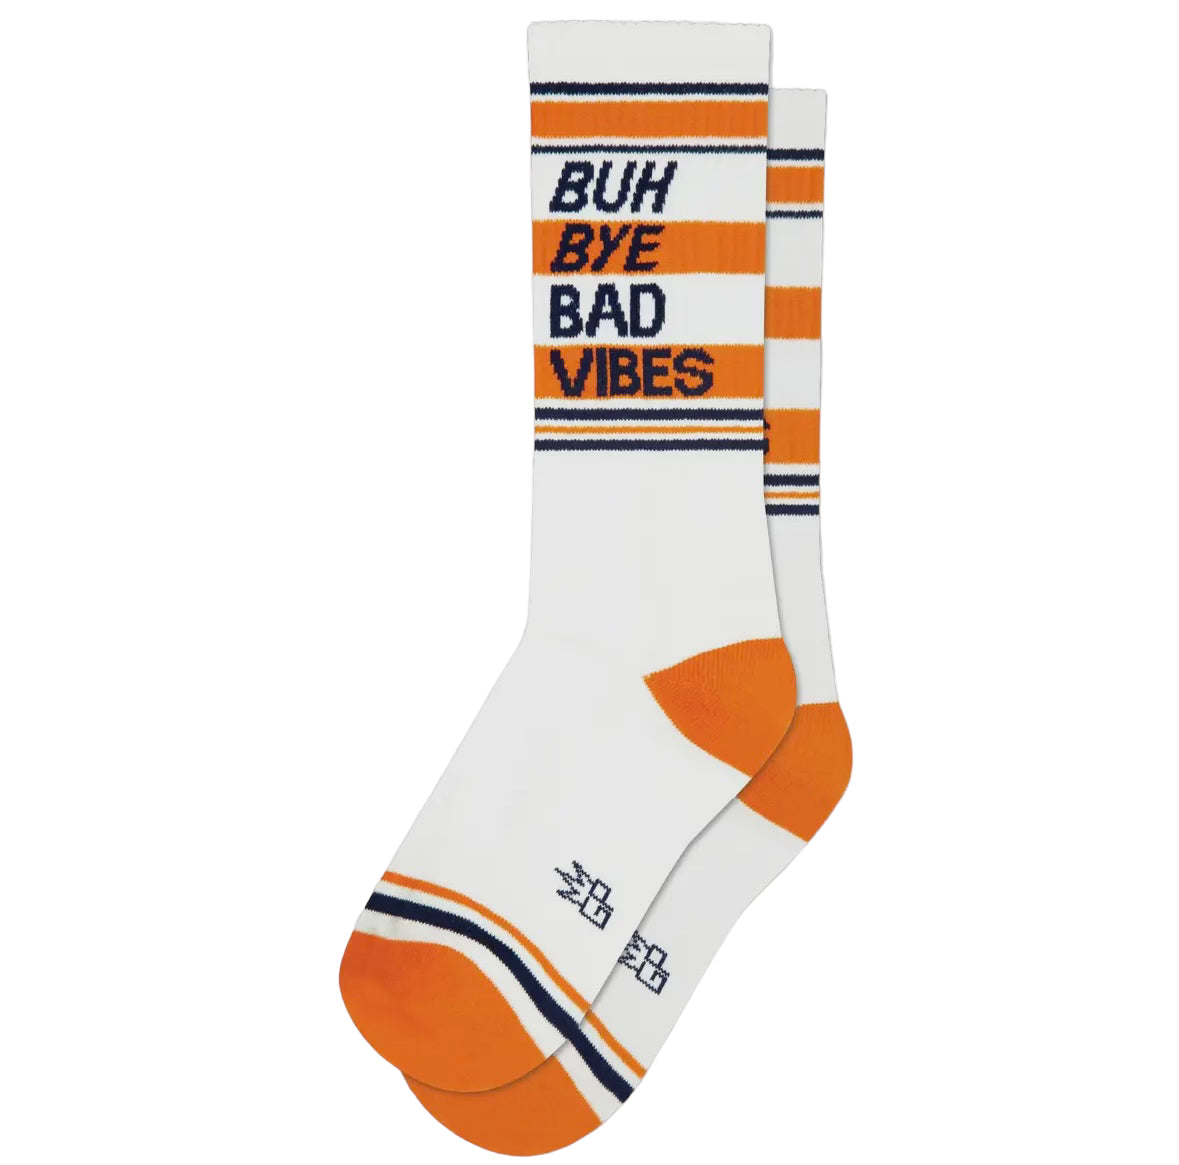 Gumball Poodle Socks: Buh Bye Bad Vibes